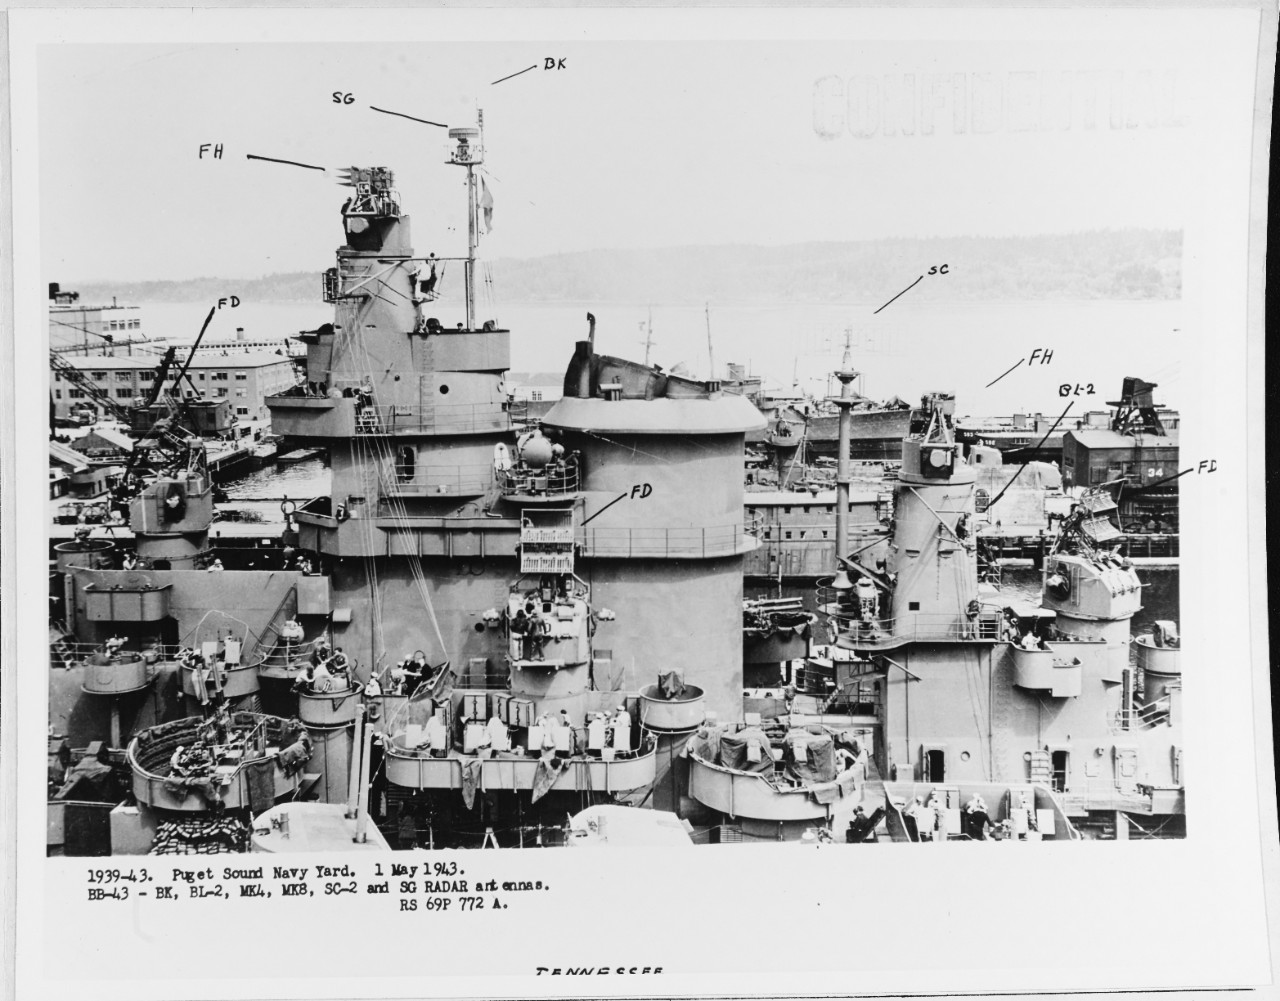 USS TENNESSEE (BB-43)